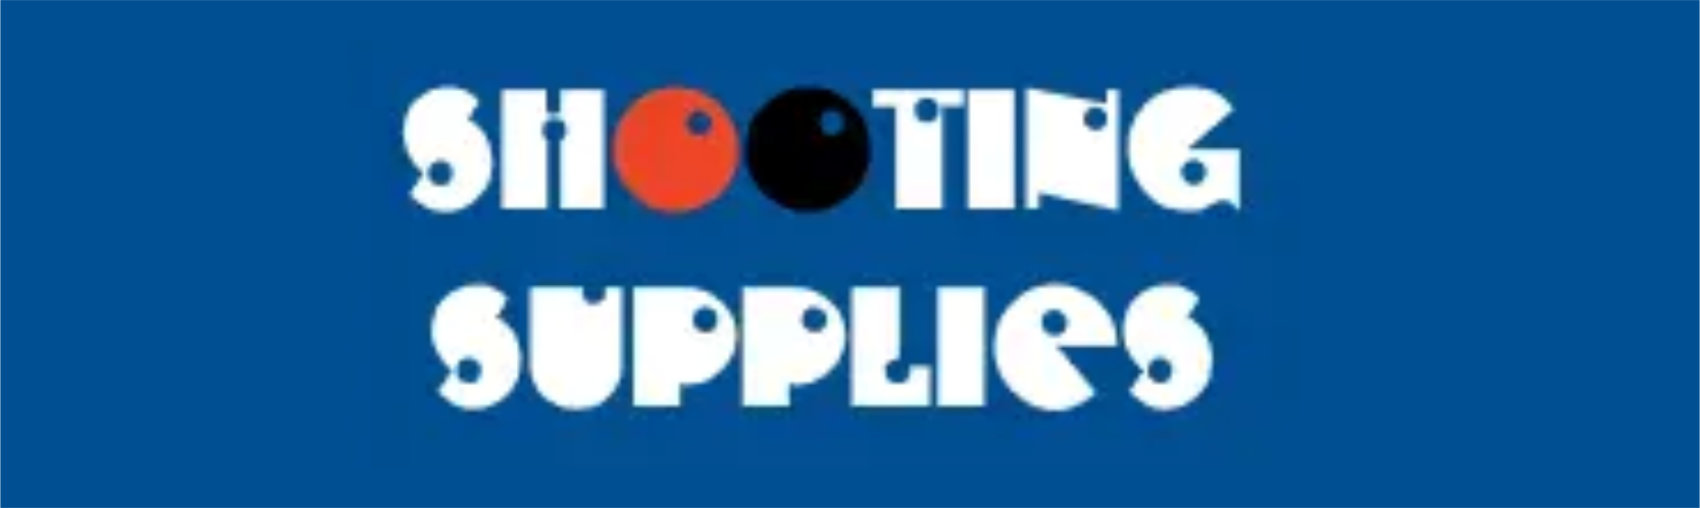 Shooting Supplies Ltd